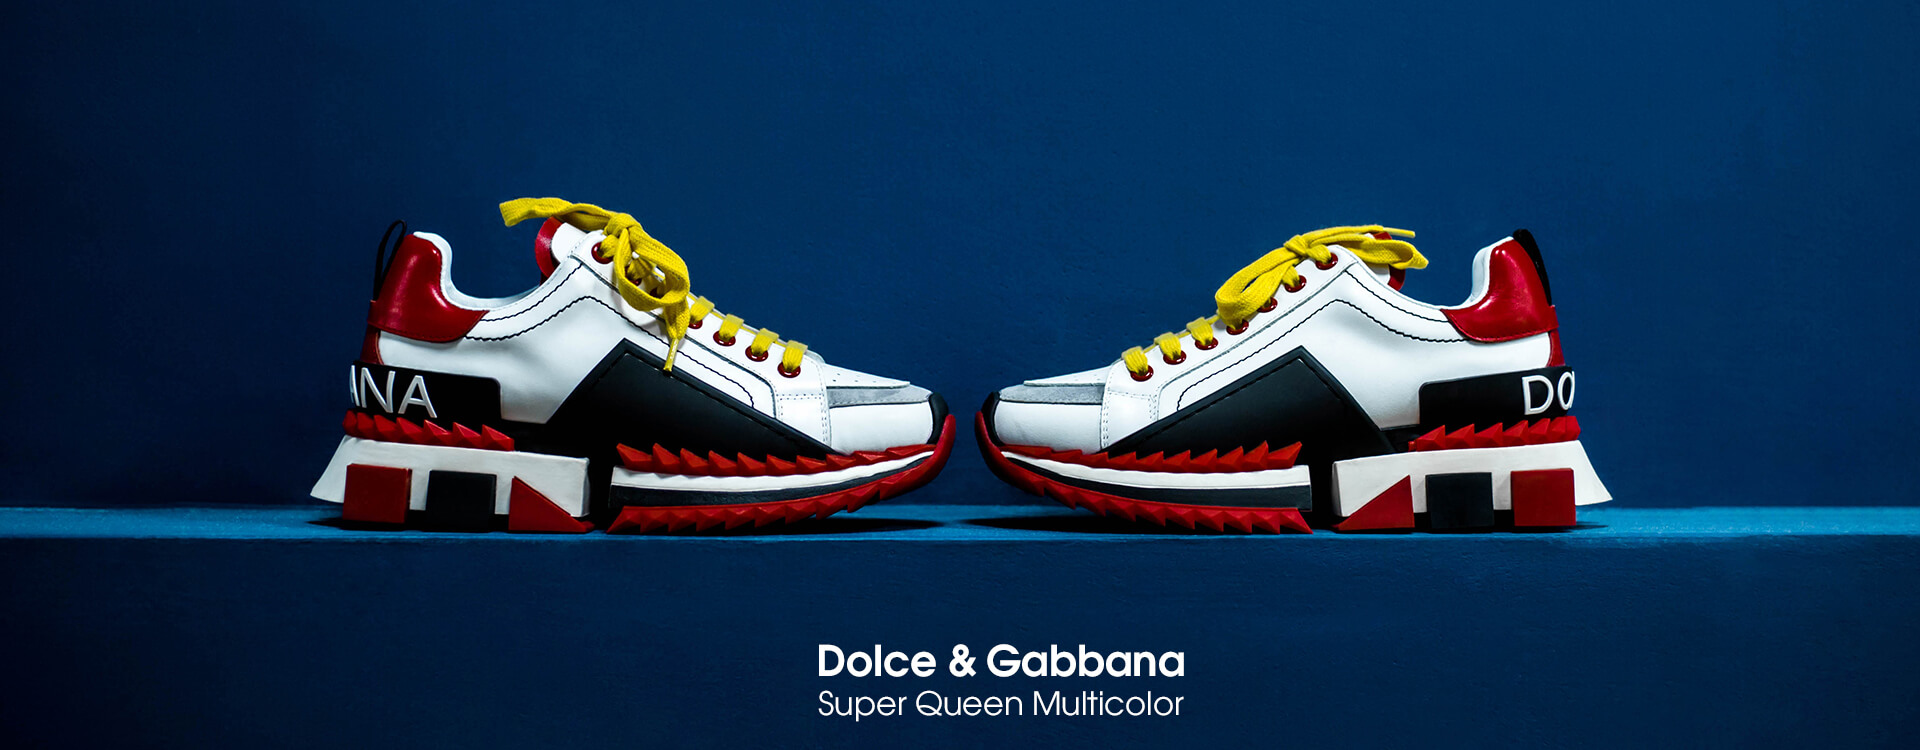 Кроссовки Dolce & Gabbana Super Queen Multicolor